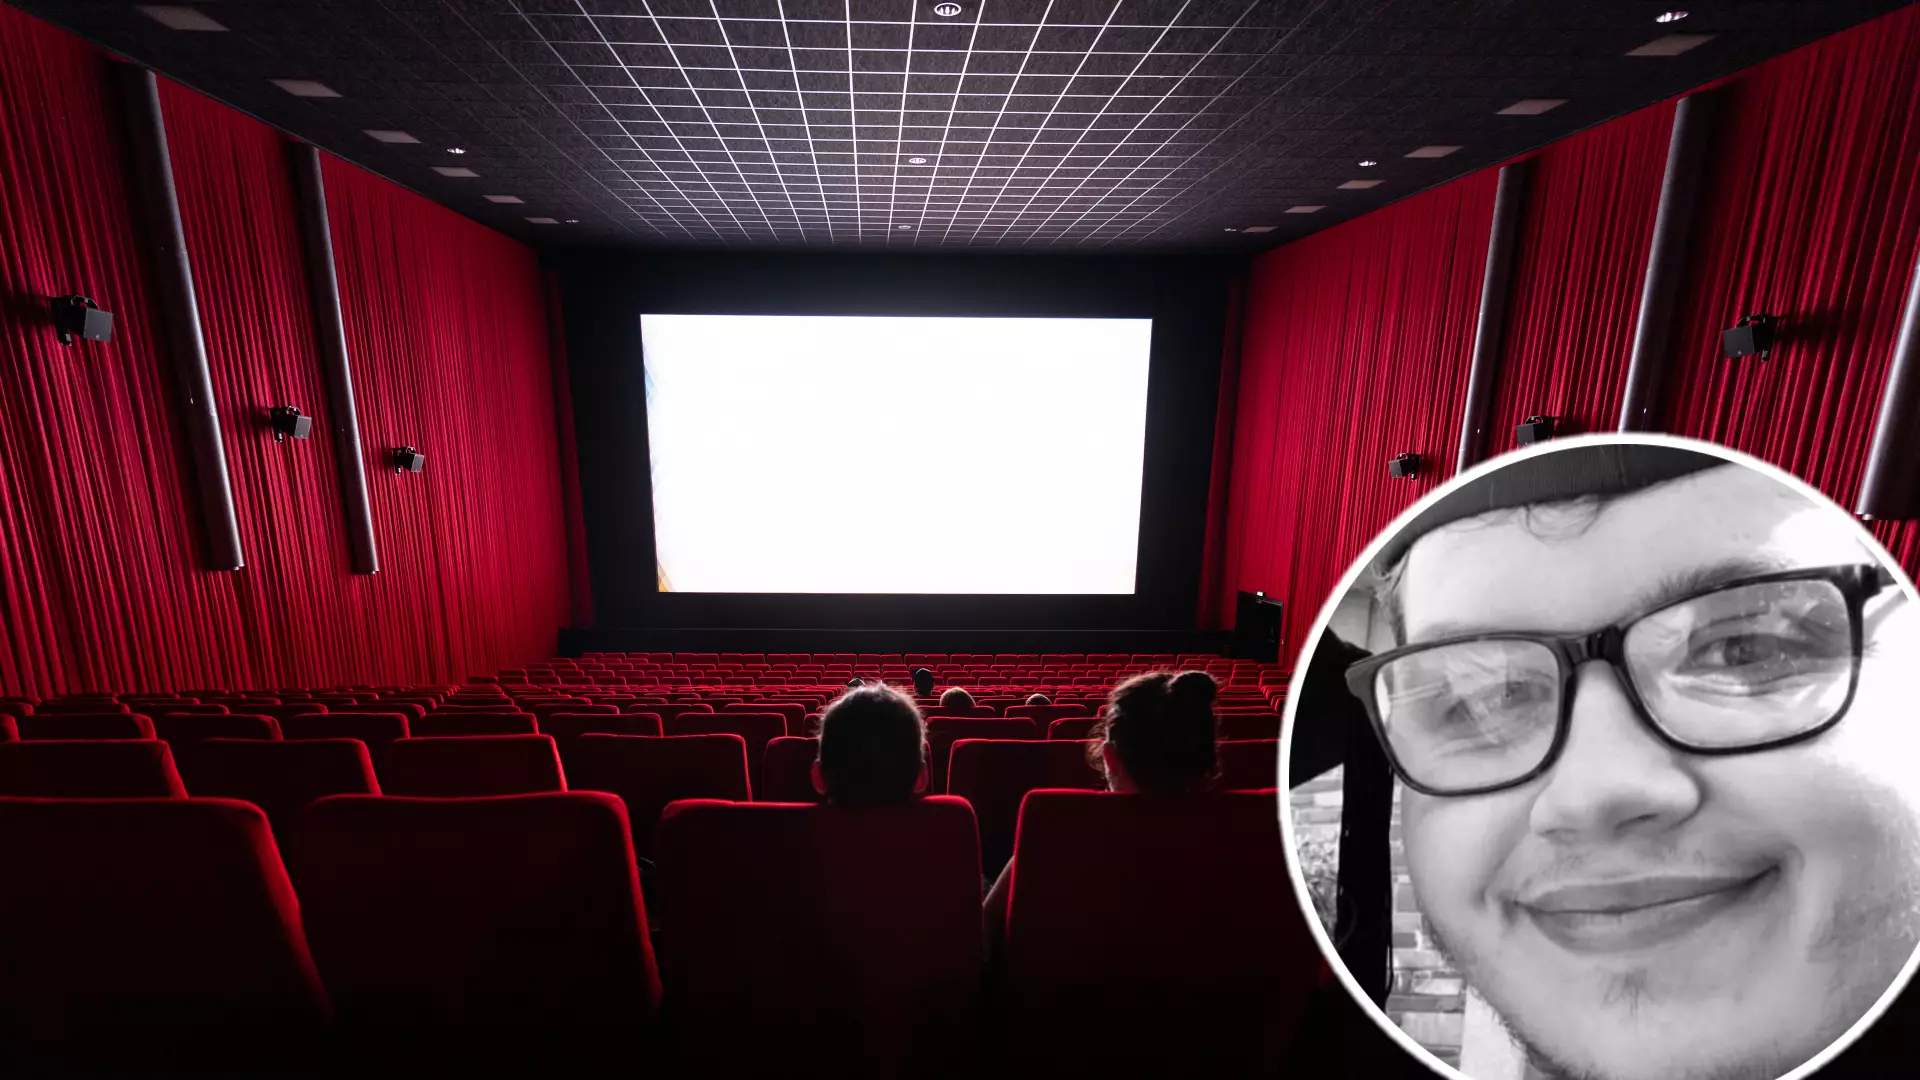 Story Of Elderly Man Returning To His Local Cinema Brings People To Tears